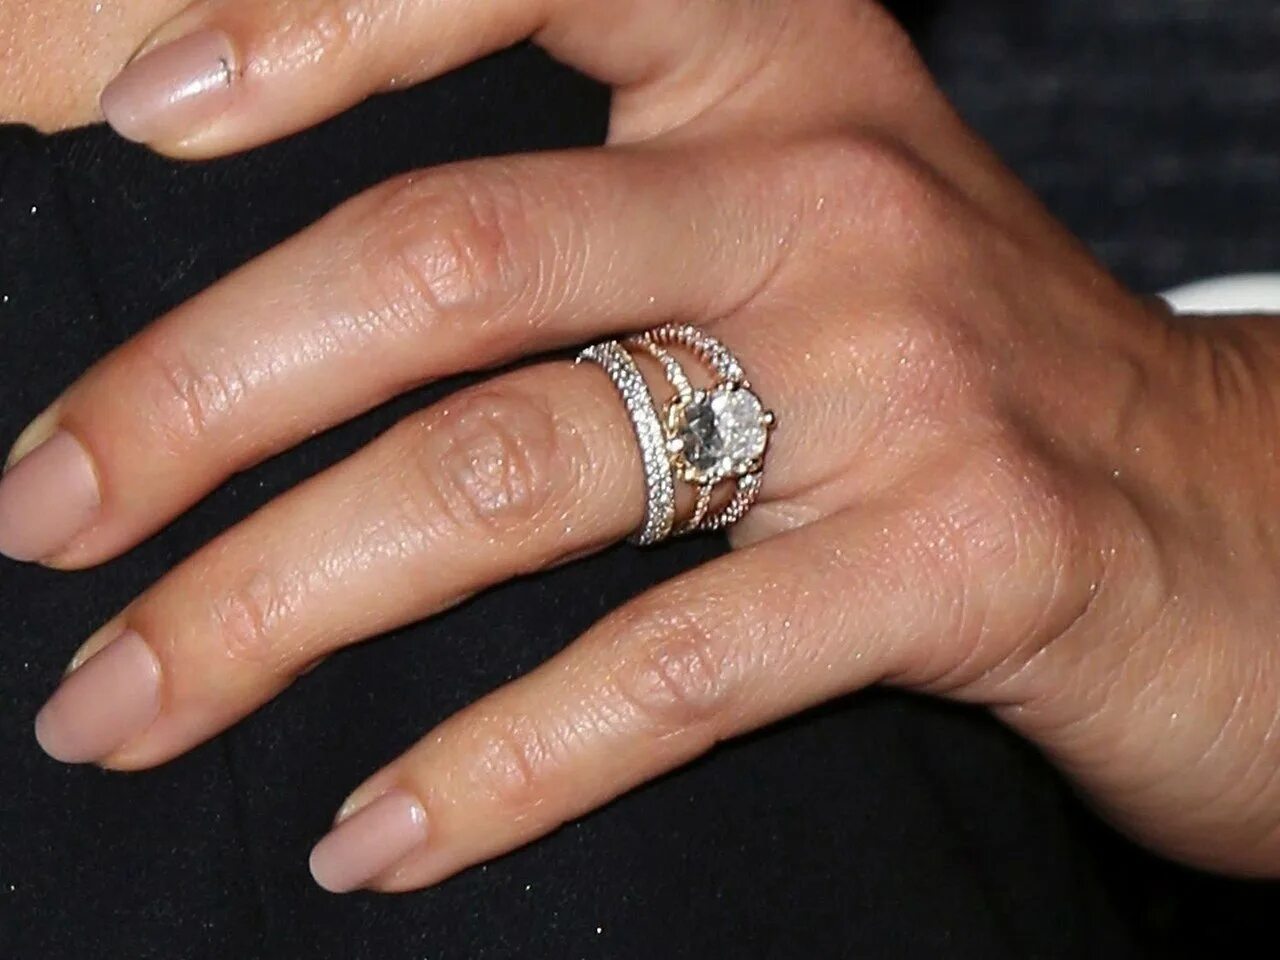 Poor girl ate wedding ring на русском. Обручальное кольцо на пальце. Кольцо на безымянном пальце. Помолвочное кольцо на пальце.